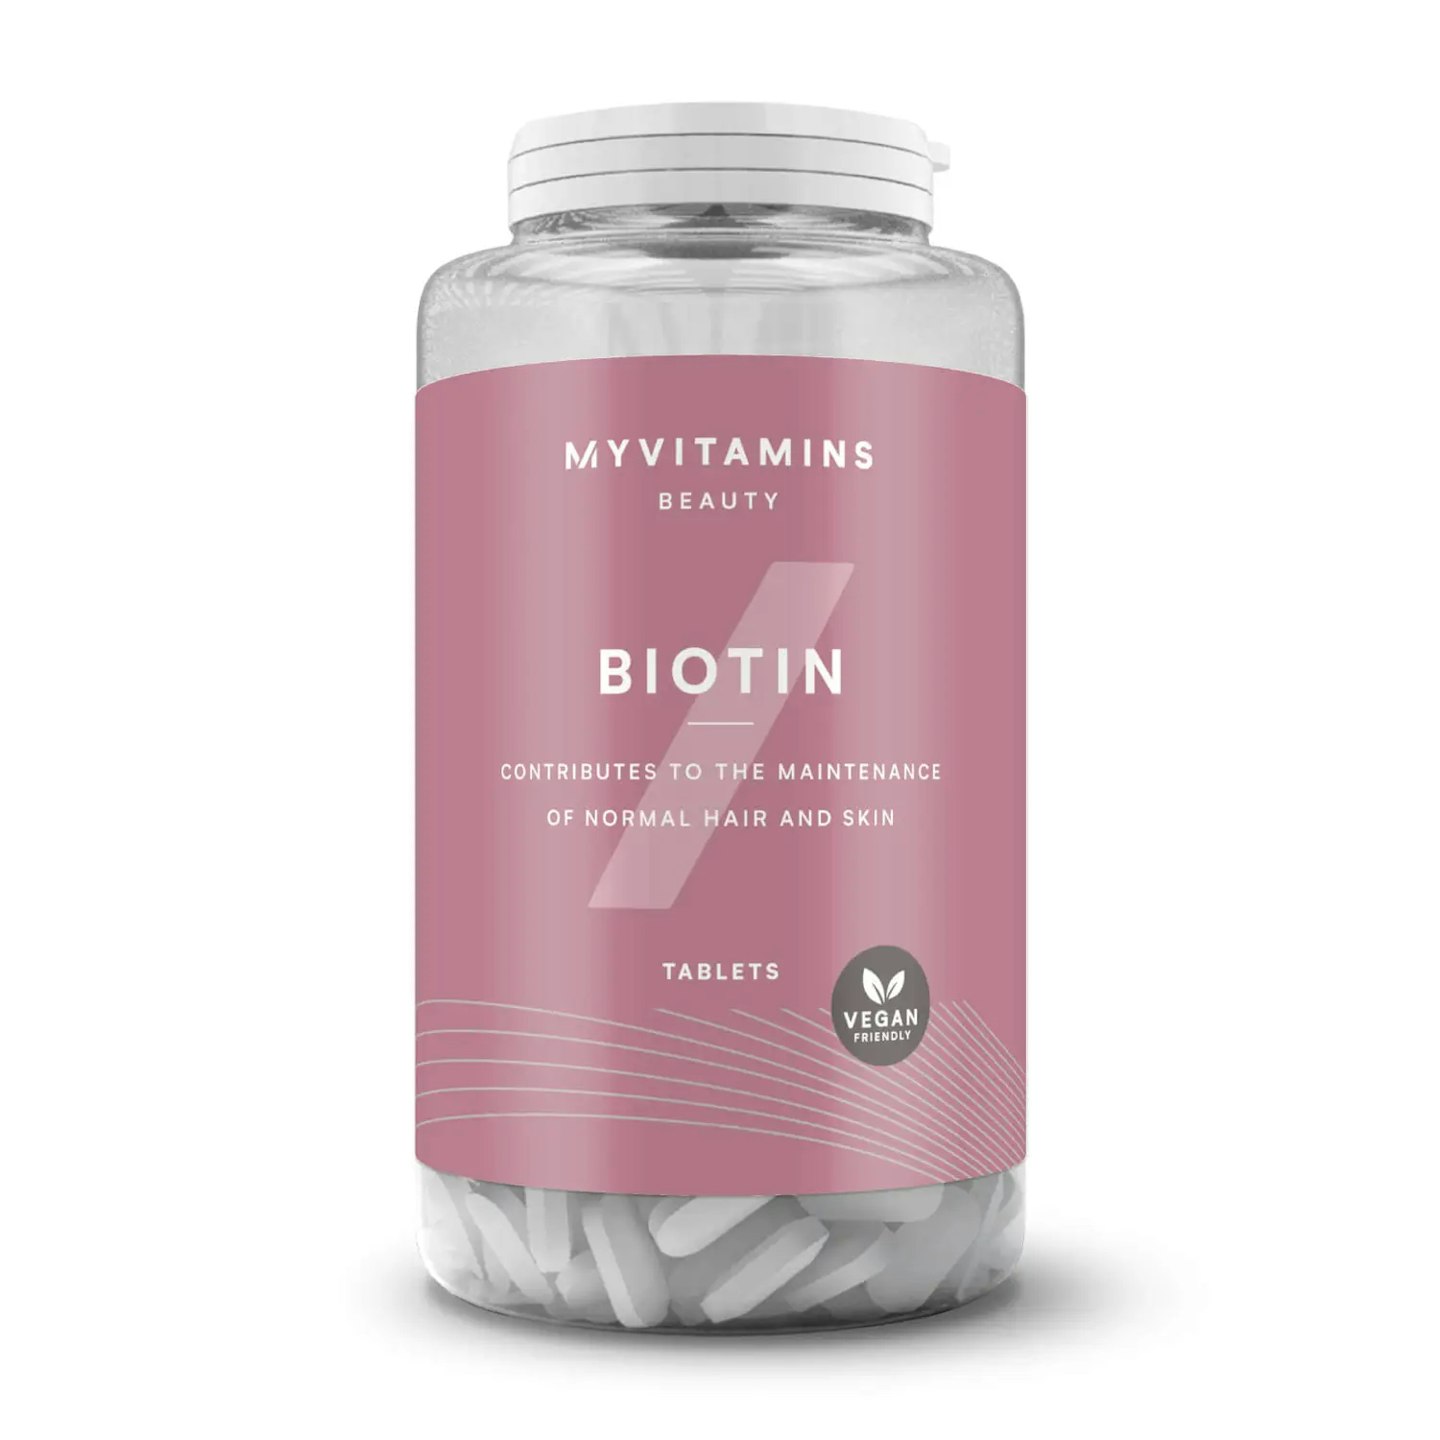 MyVitamins Biotin Tablets